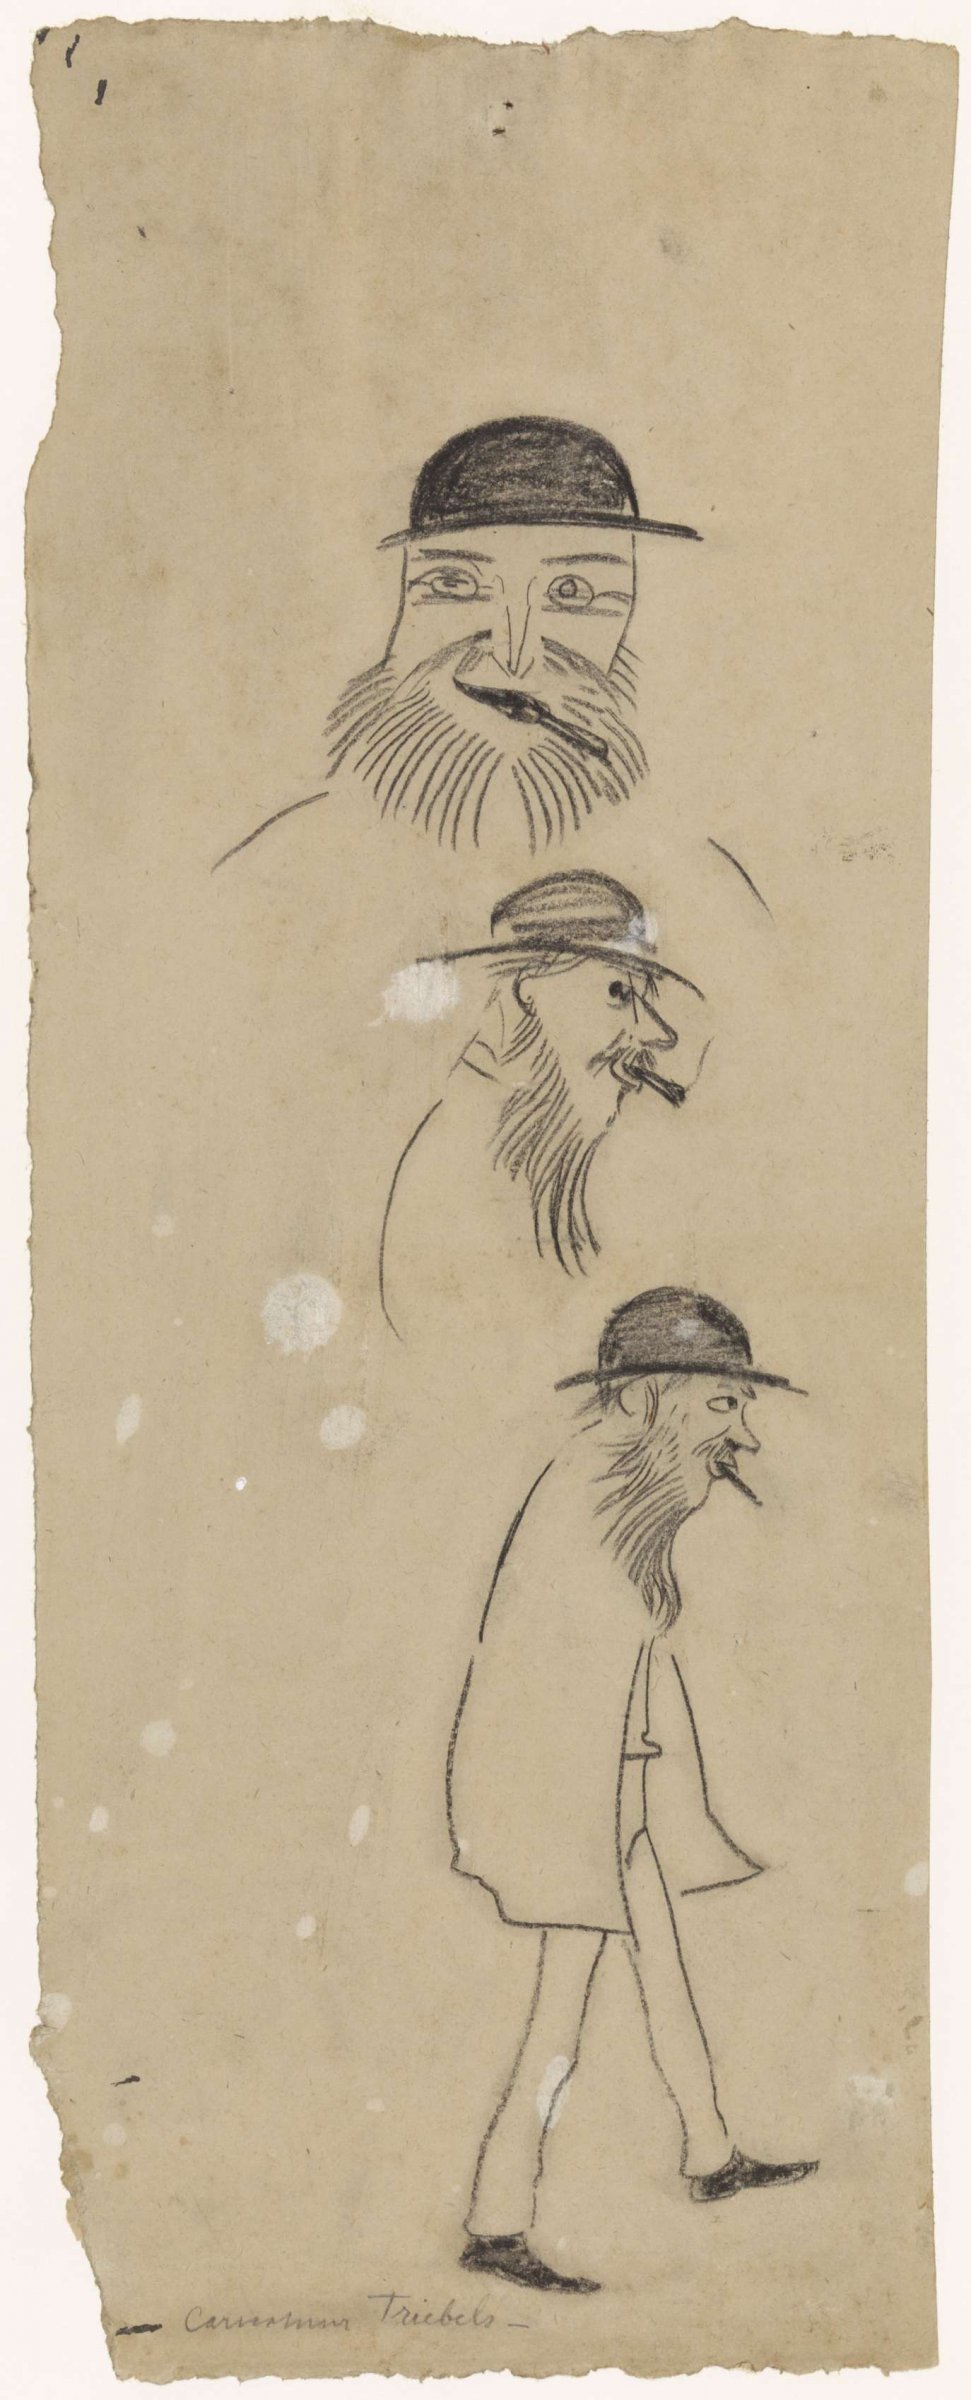 Caricatures of Triebels, Gerrit Willem Dijsselhof, 1876 - 1924